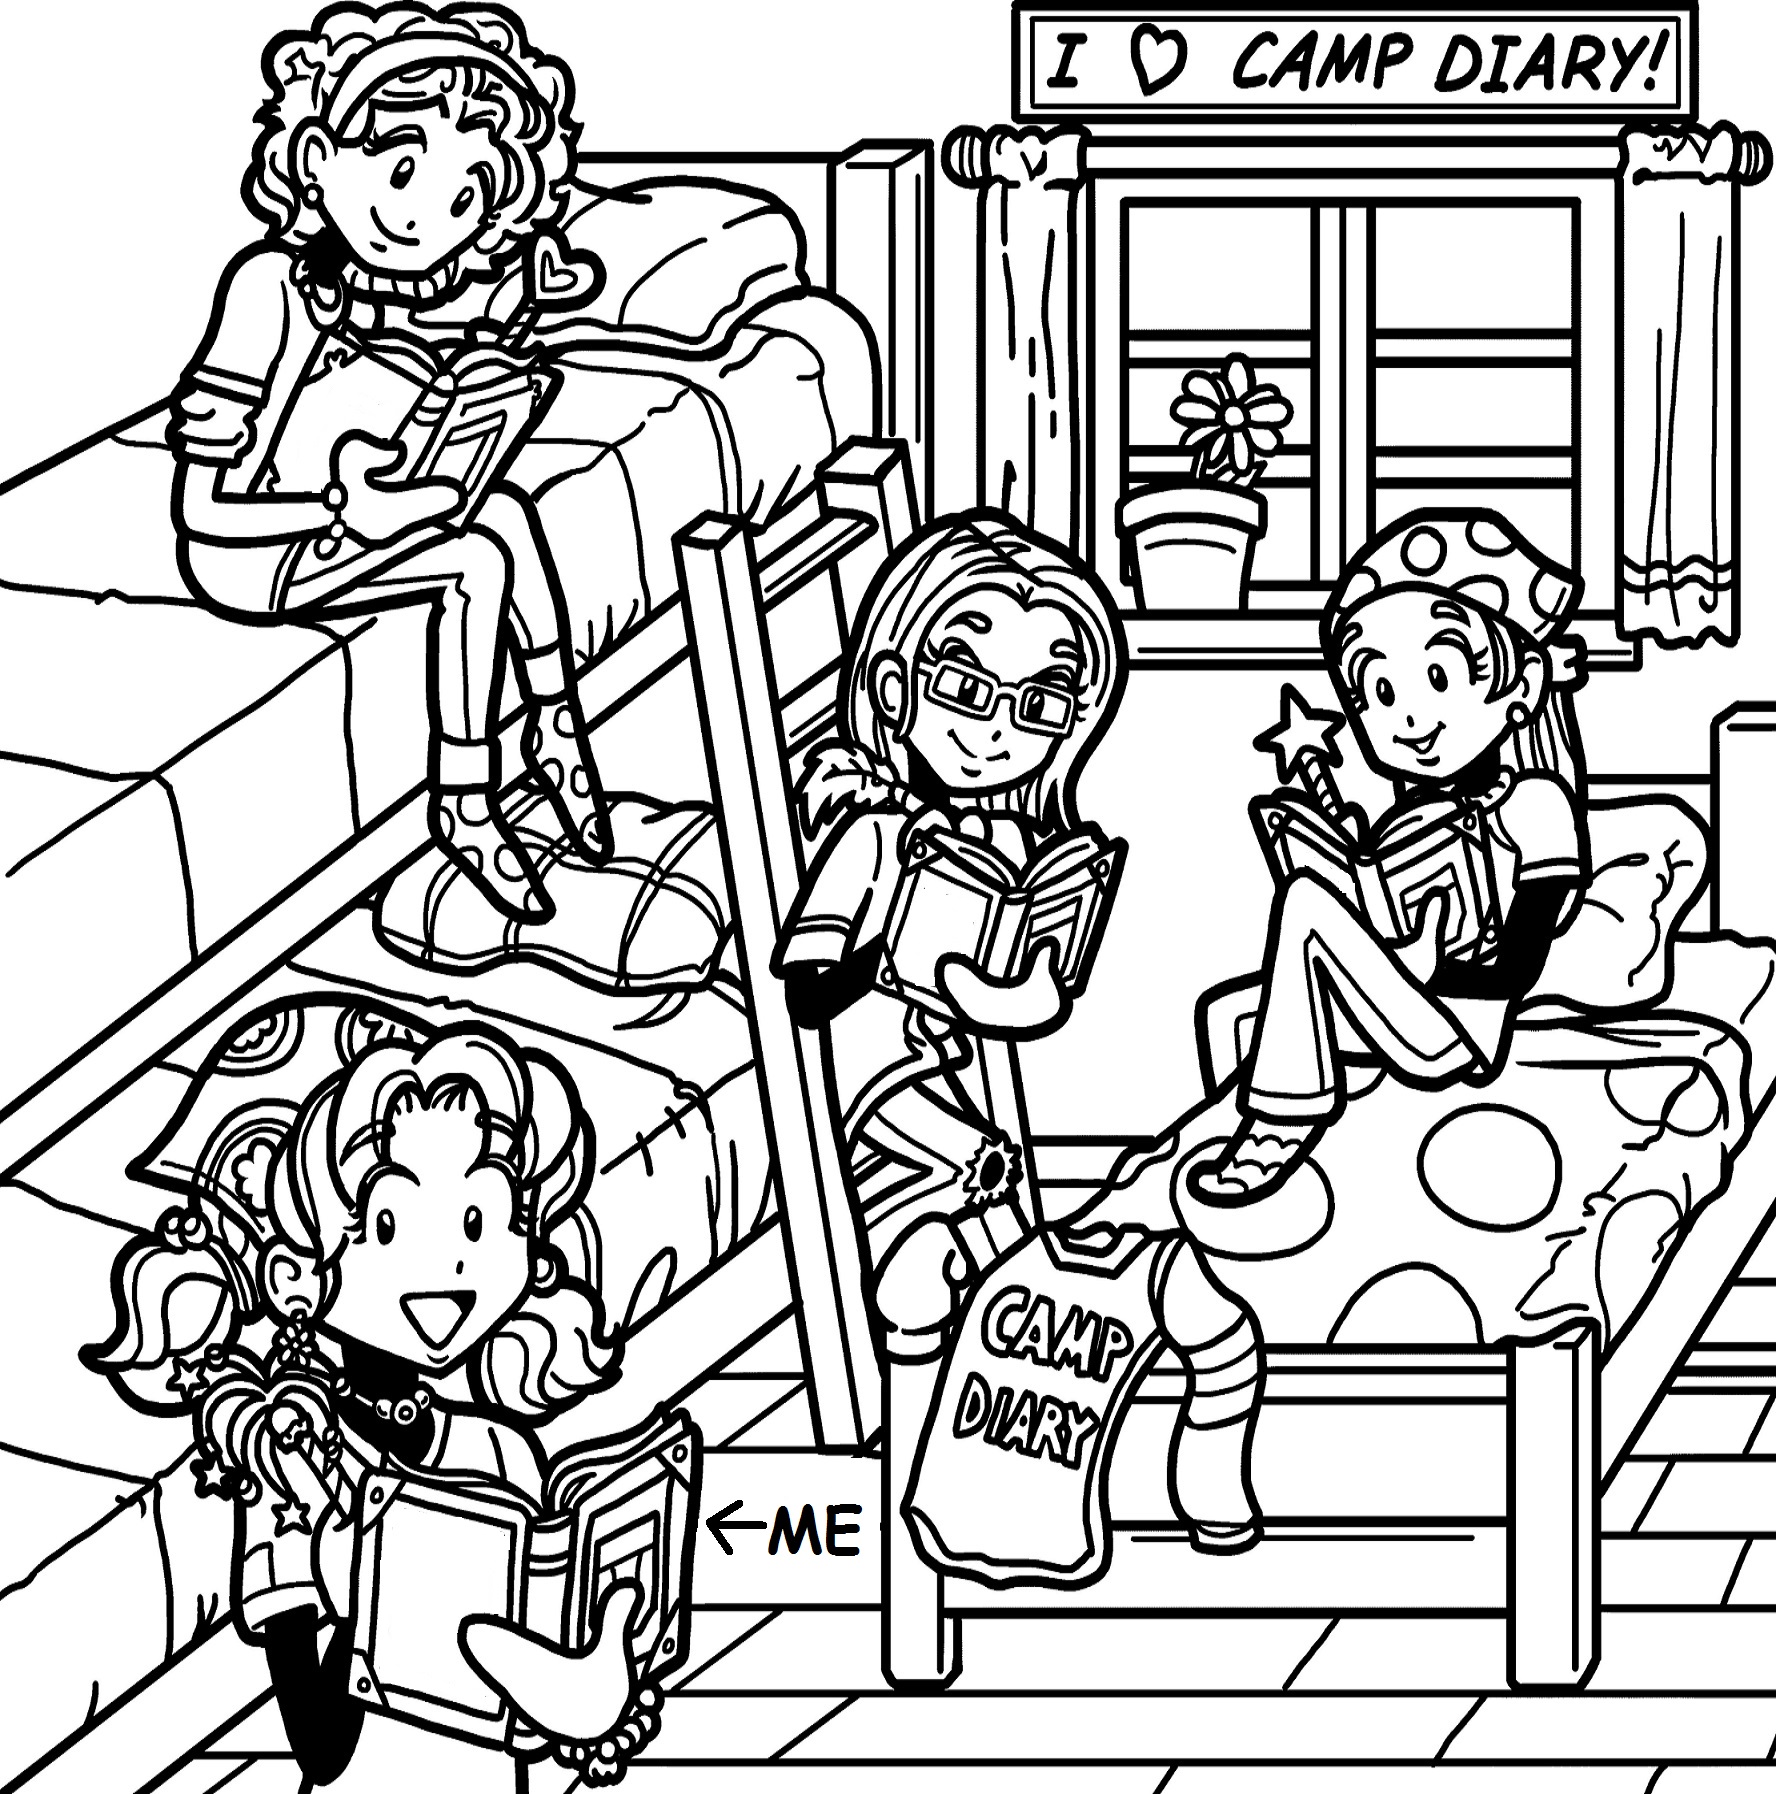 Nikki's Camp Diary